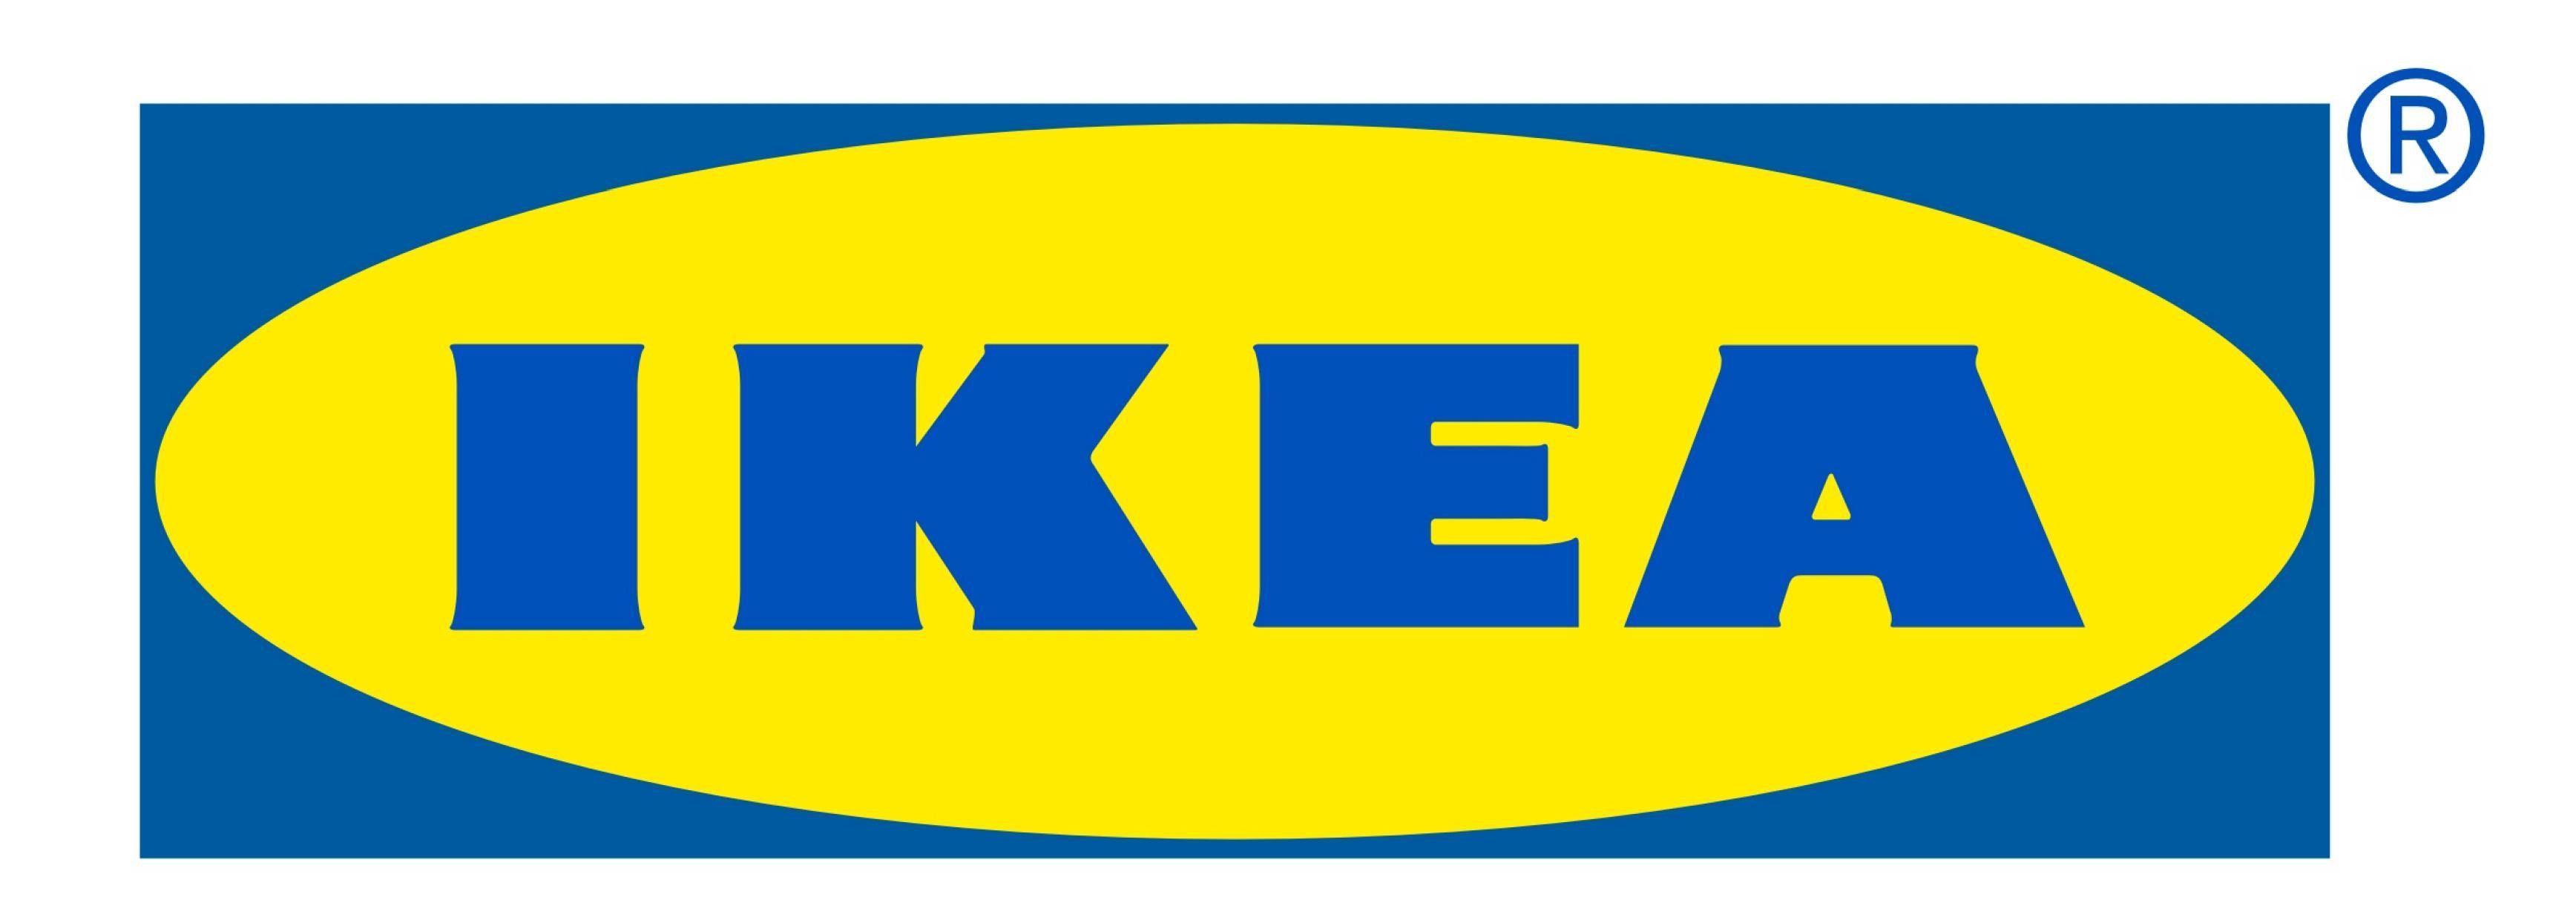 IKEA Yellow Logo - IKEA Logo (شعار شركة ايكيا) PNG Transparent Background Download ...